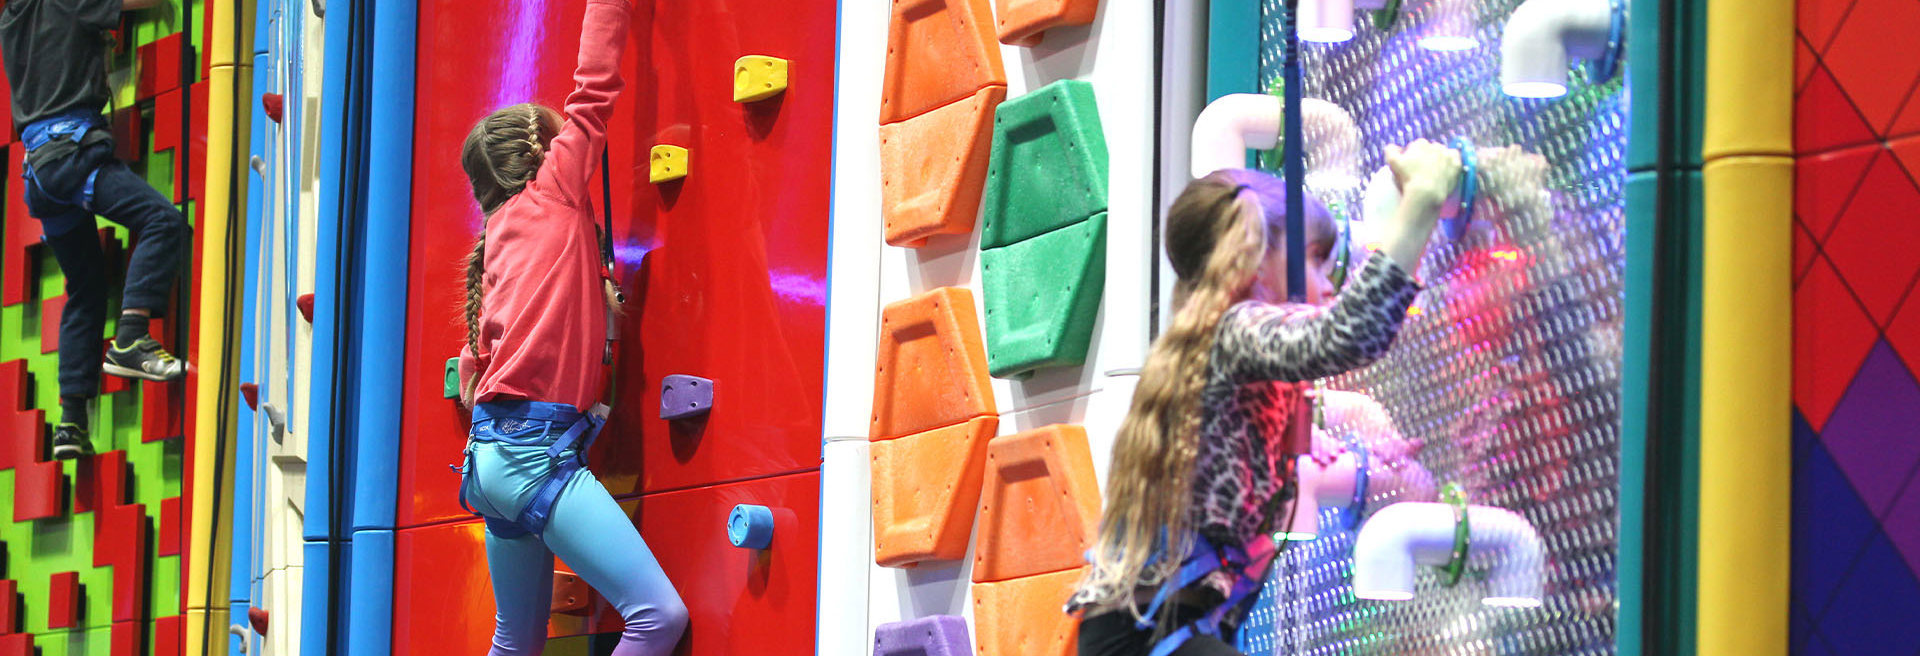 Group of children climbing on clip n climb walls